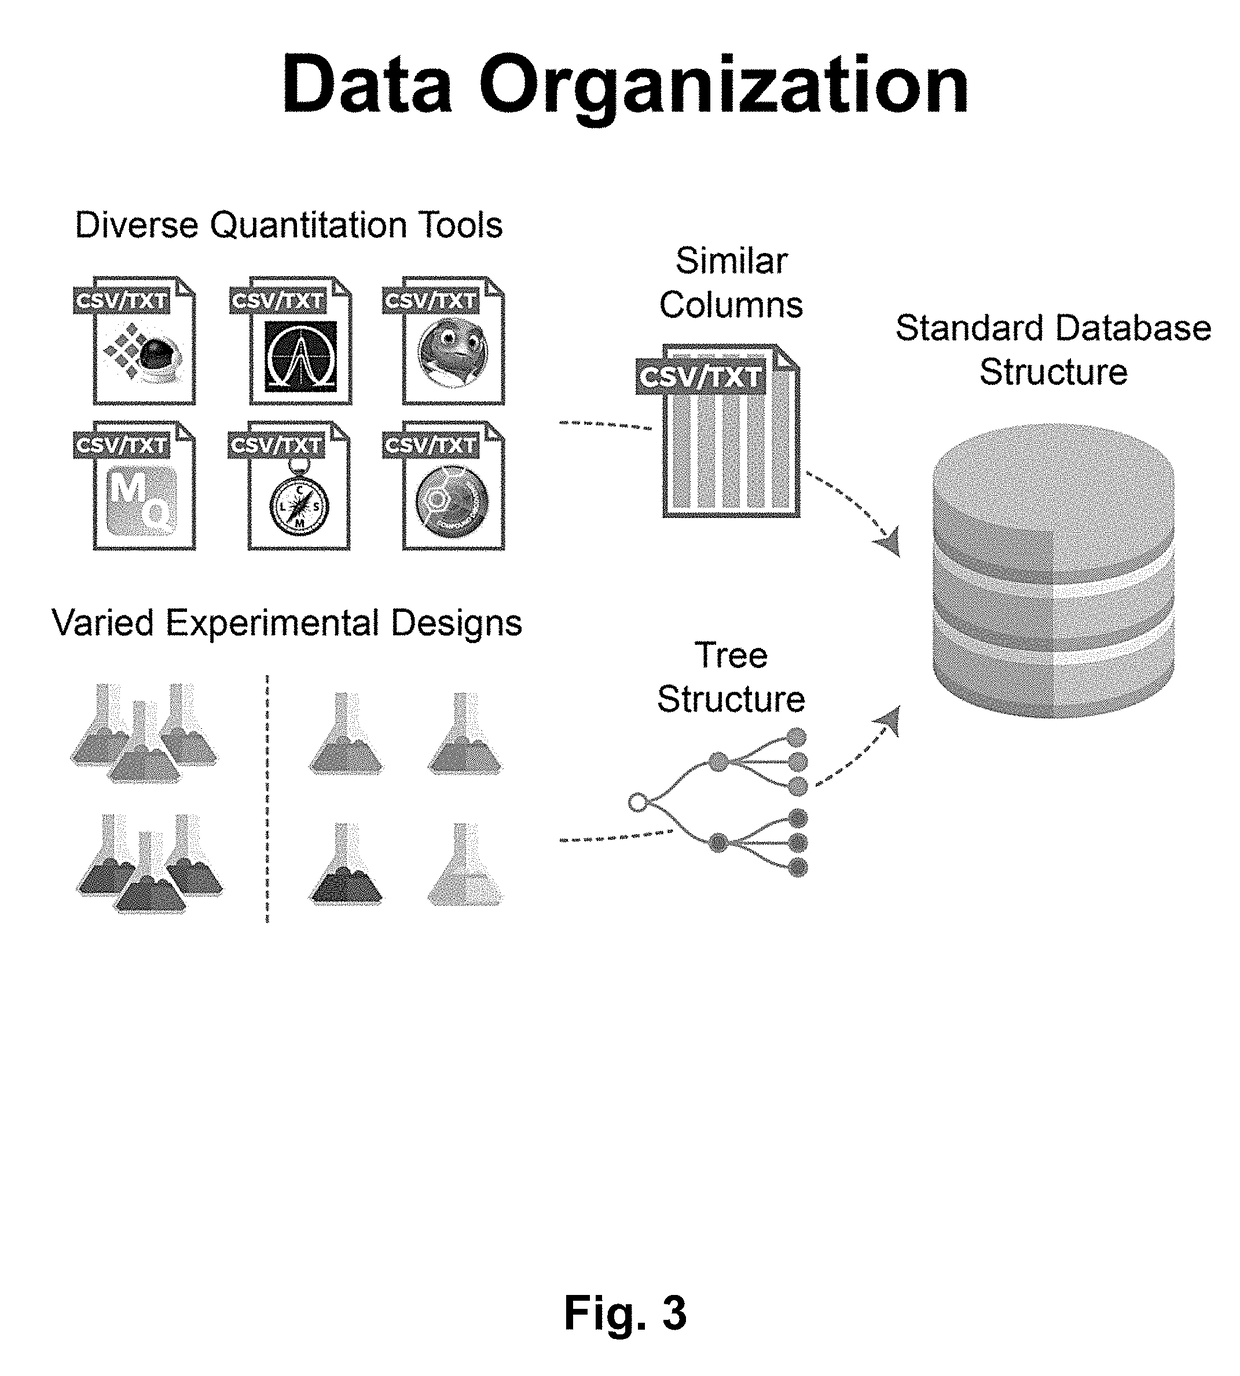 Web-Based Data Upload and Visualization Platform Enabling Creation of Code-Free Exploration of MS-Based Omics Data